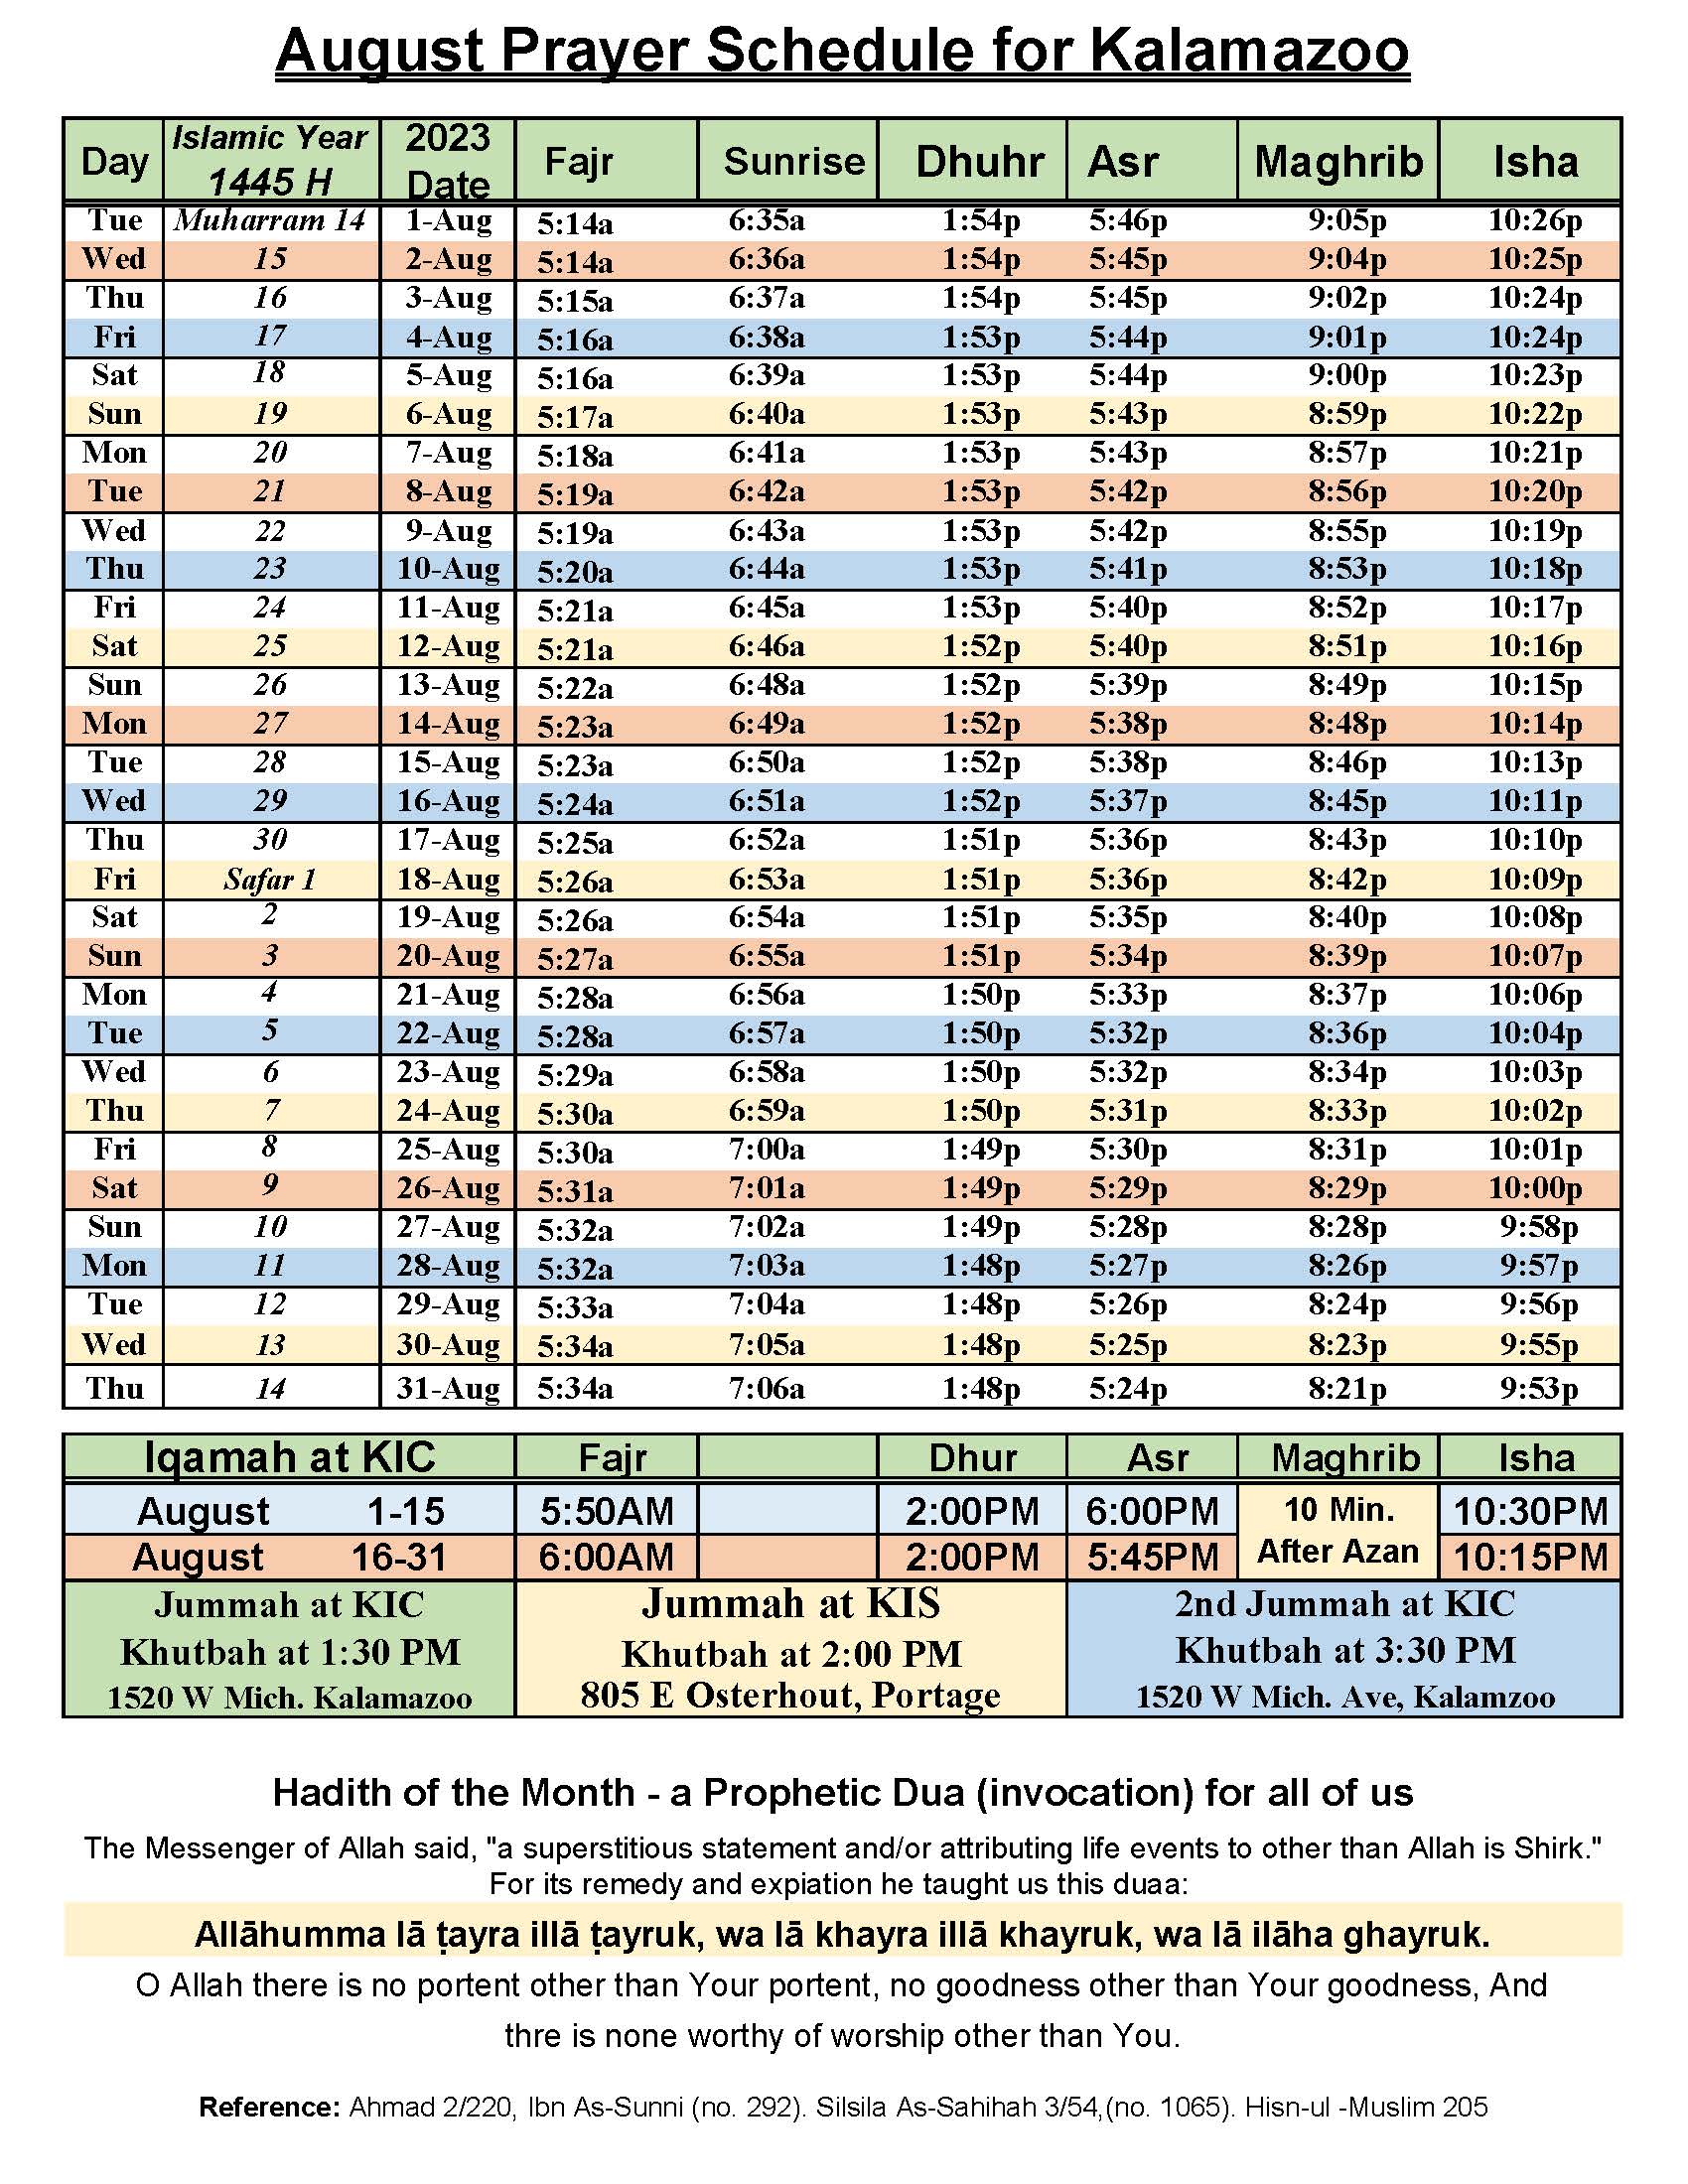 August 2023 Prayer Schedule | Kalamazoo Islamic Center